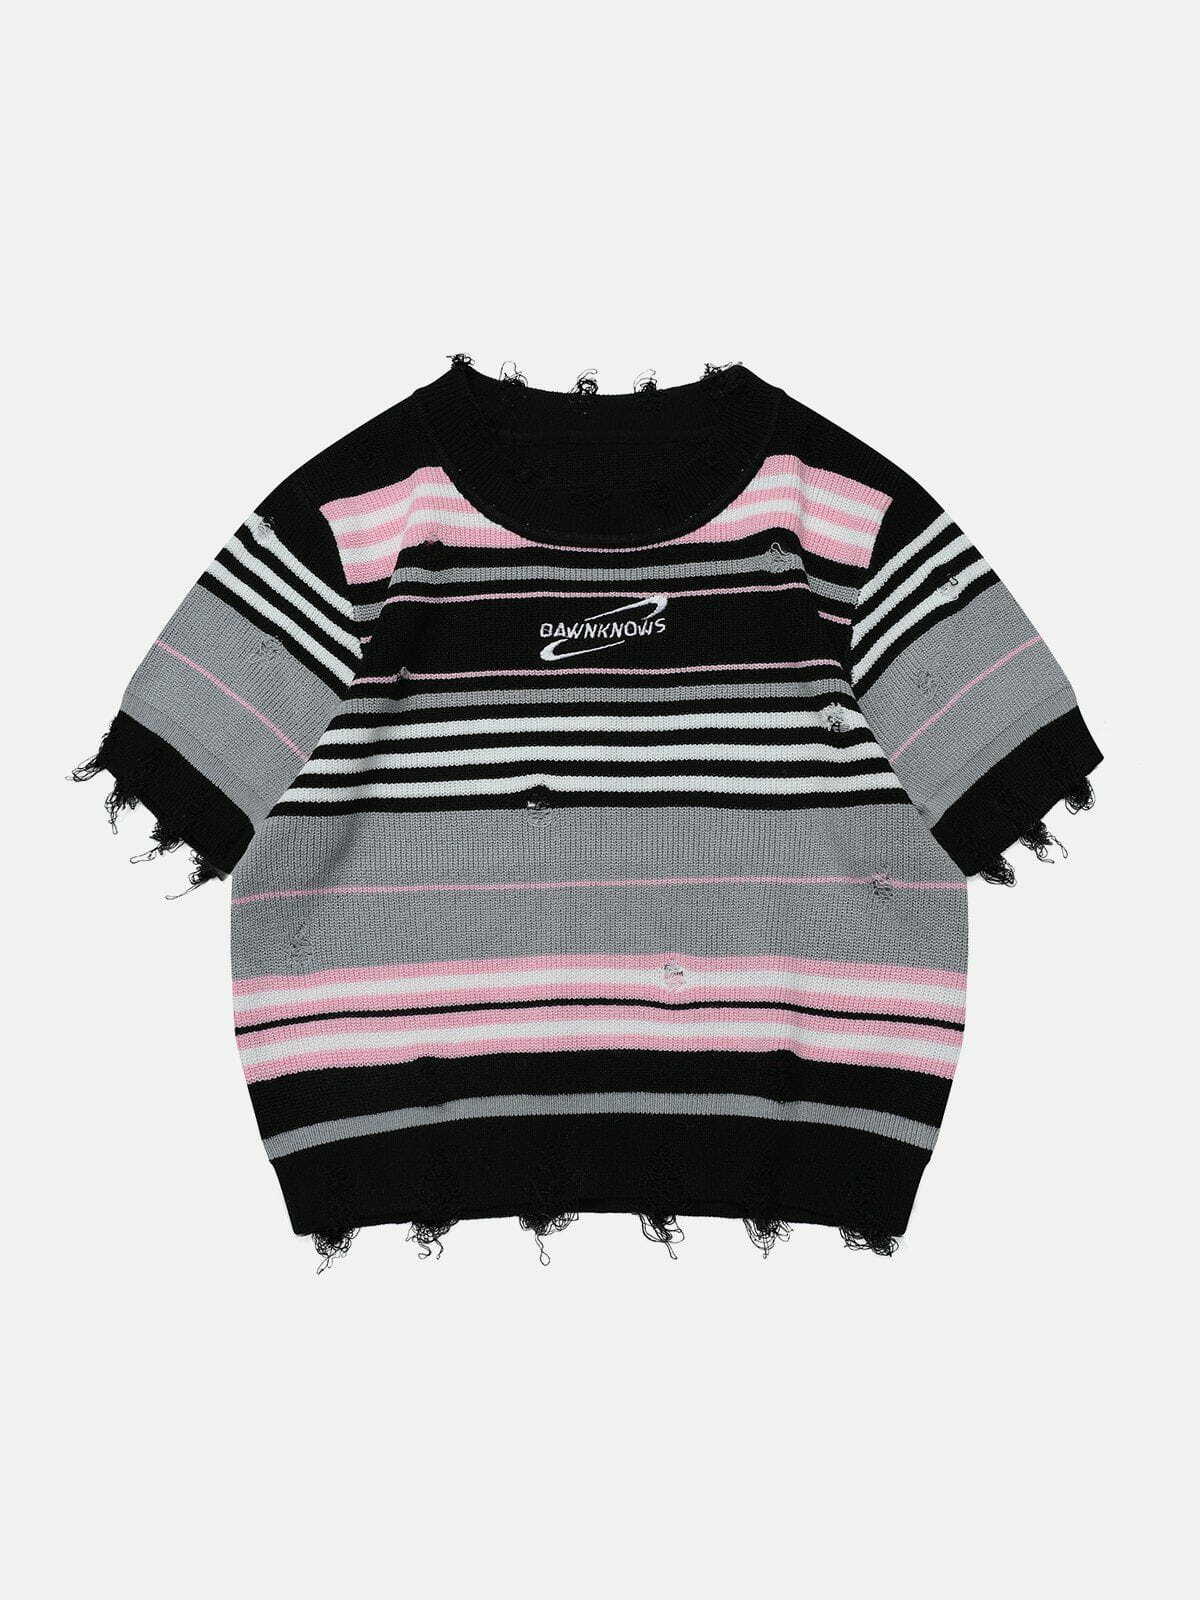 revolutionary striped knit tee edgy y2k streetwear 5229